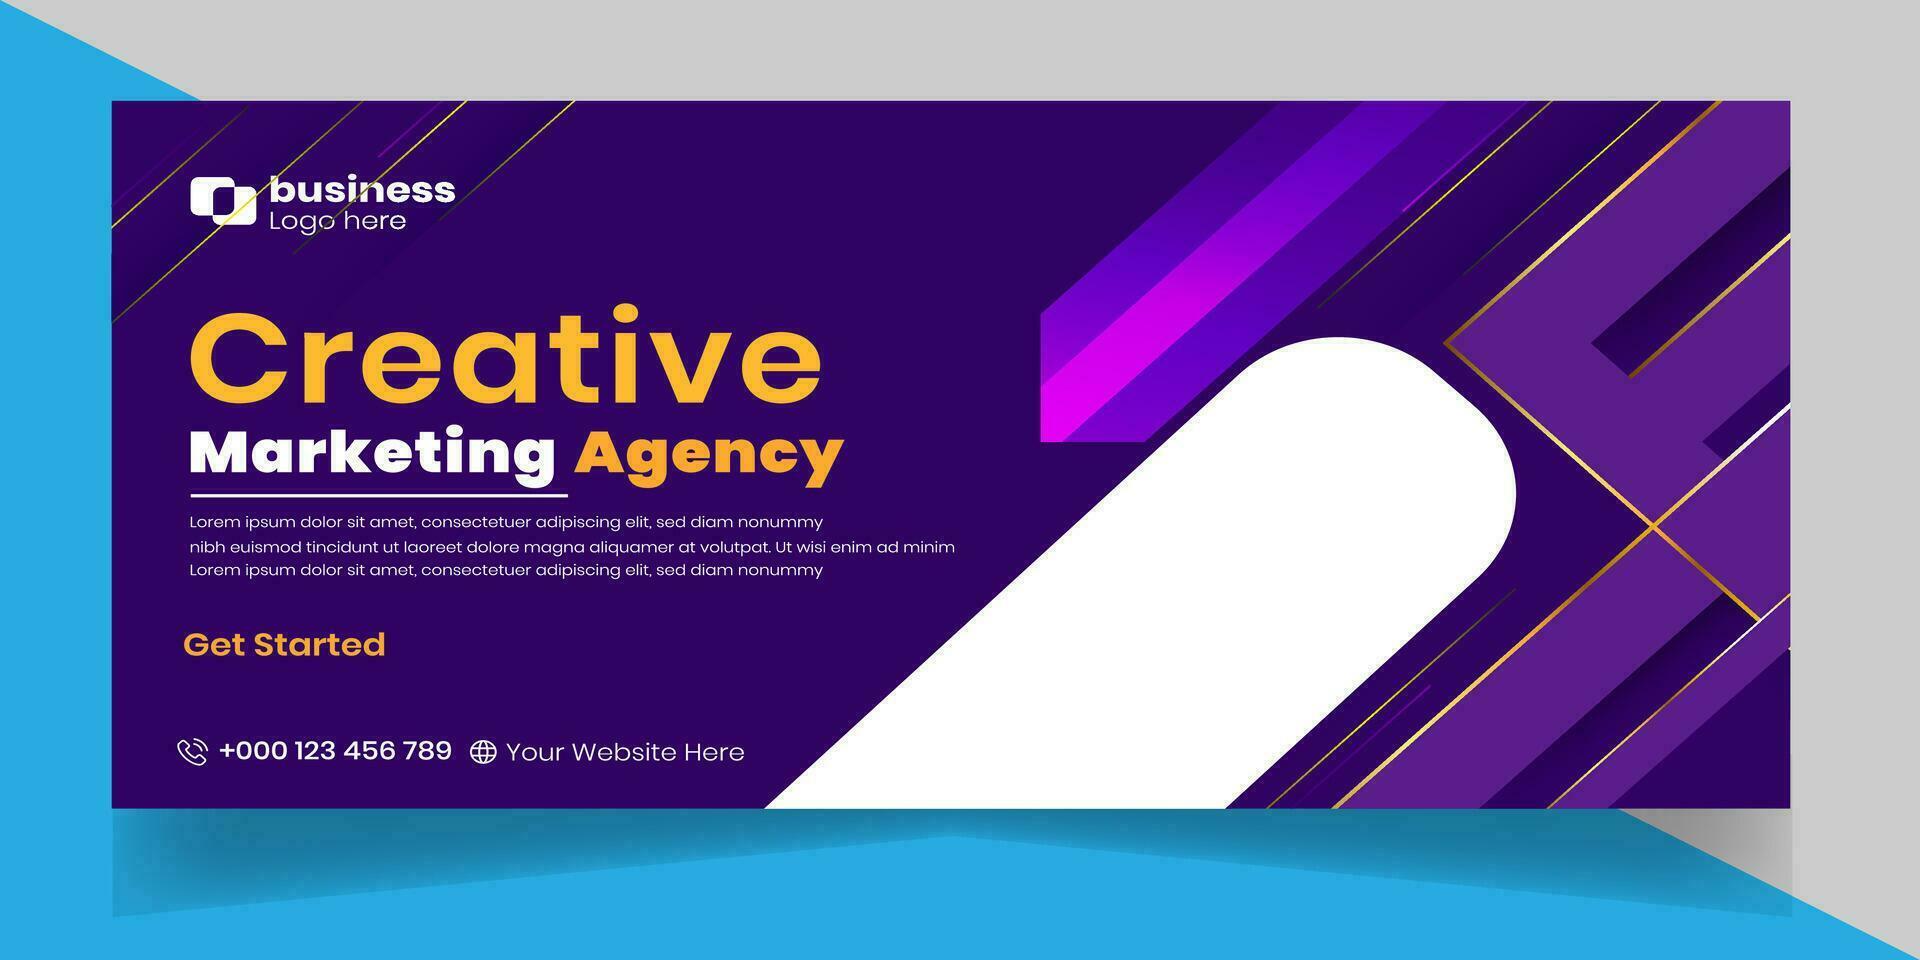 digital márketing agencia social medios de comunicación negocio promoción con web bandera modelo diseño. vector